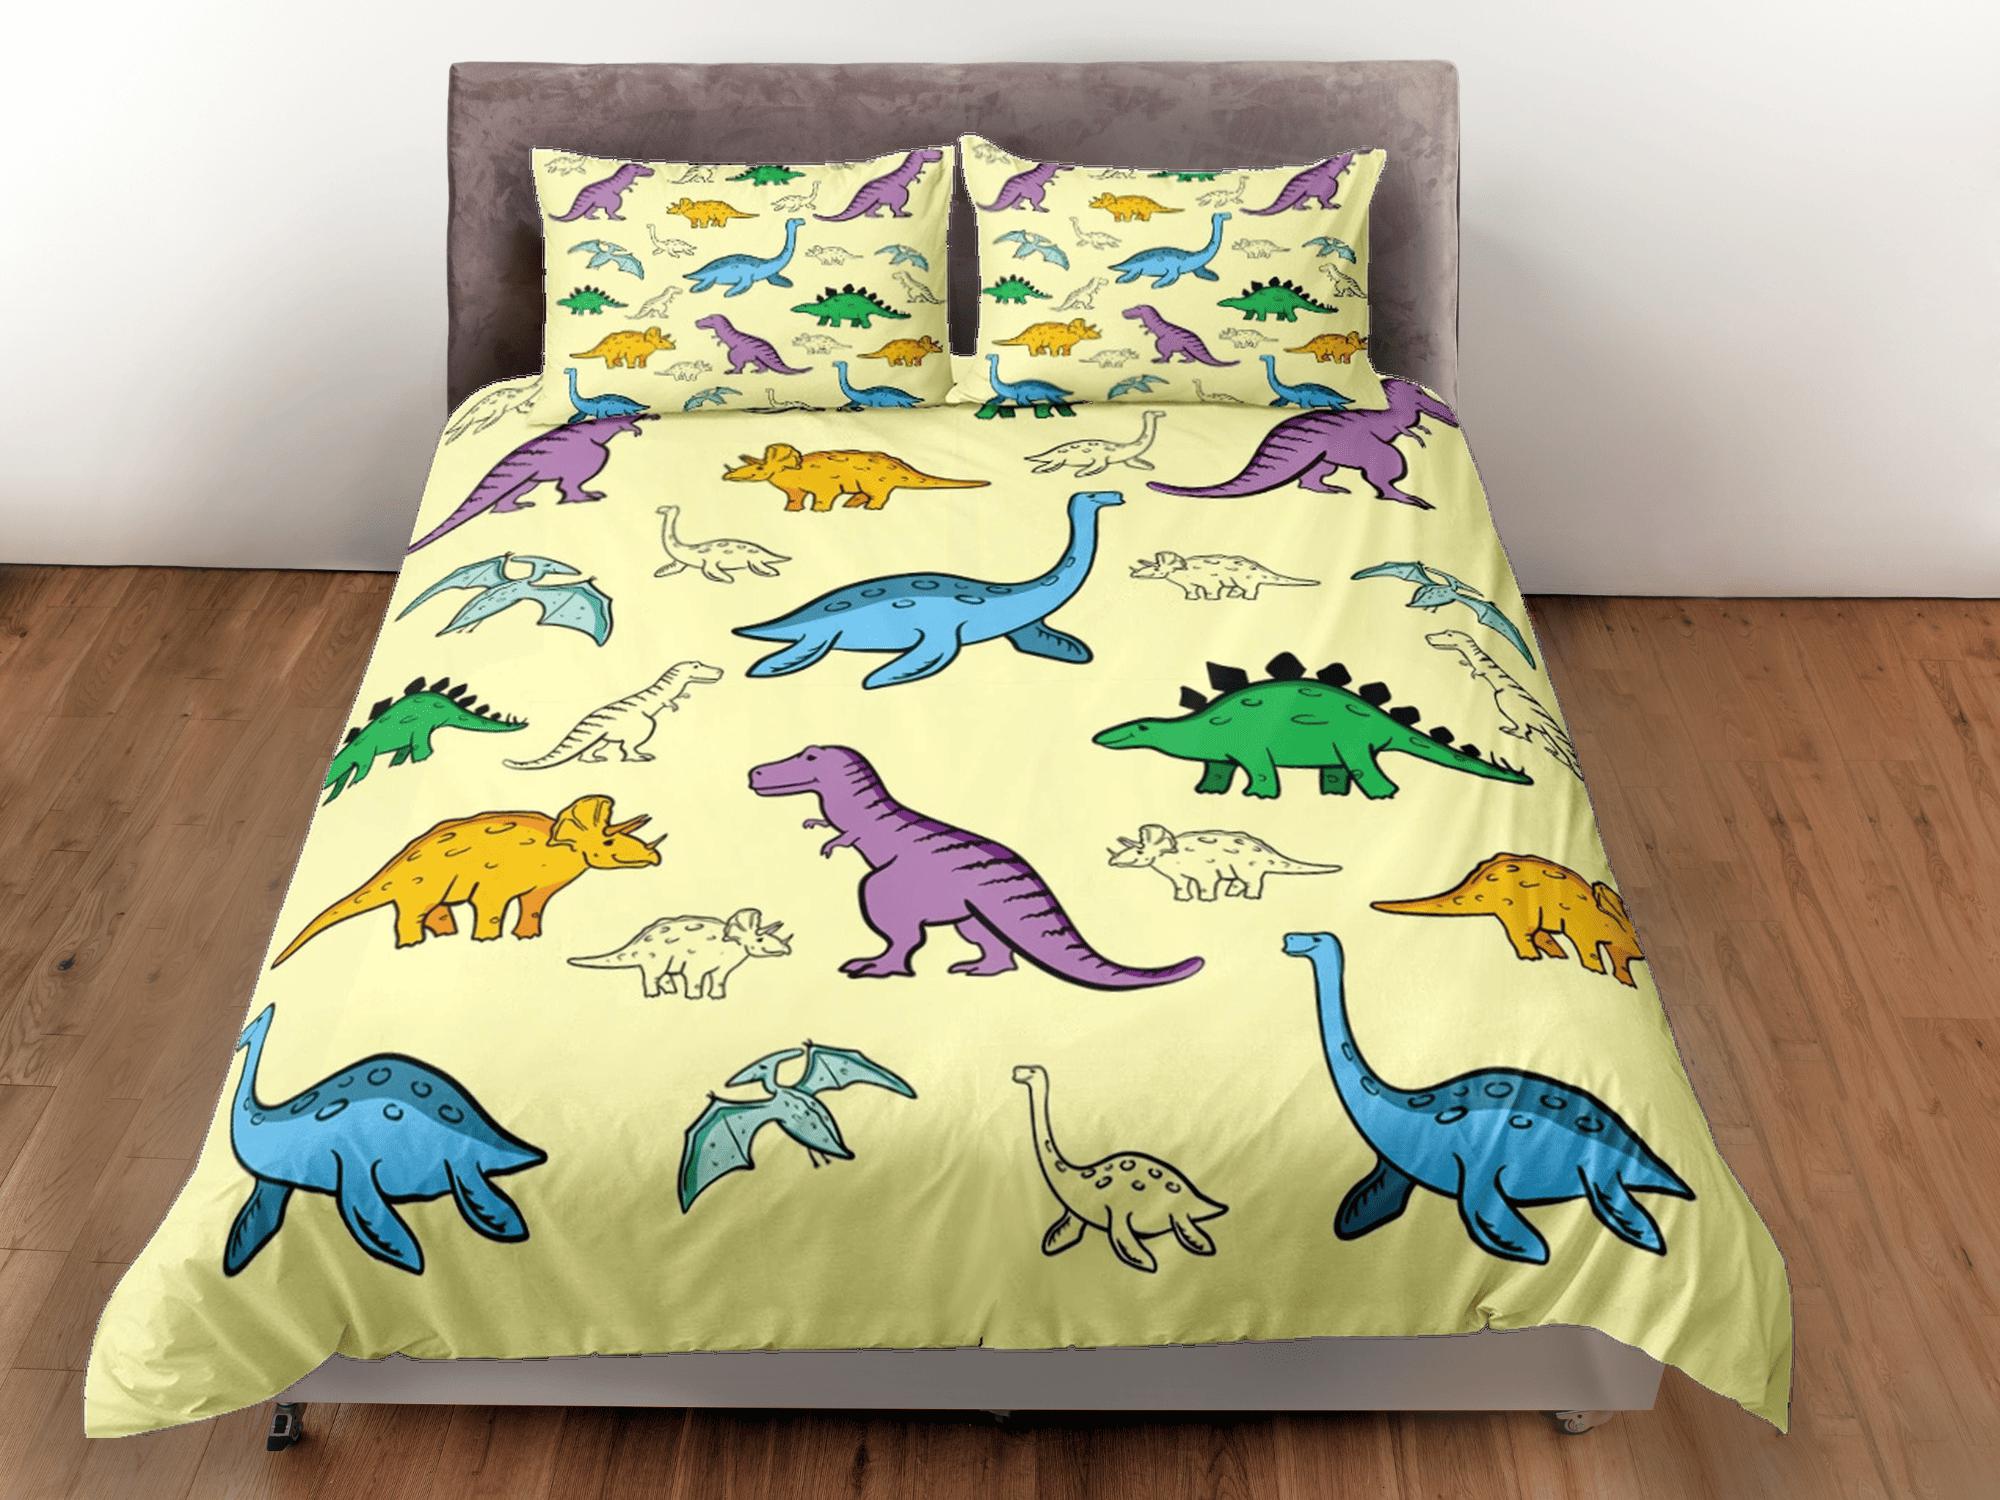 daintyduvet Yellow dinosaur bedding, kids bedding full, cute duvet cover set, dinosaur nursery bed decor, colorful bedding, baby dinosaur, toddler